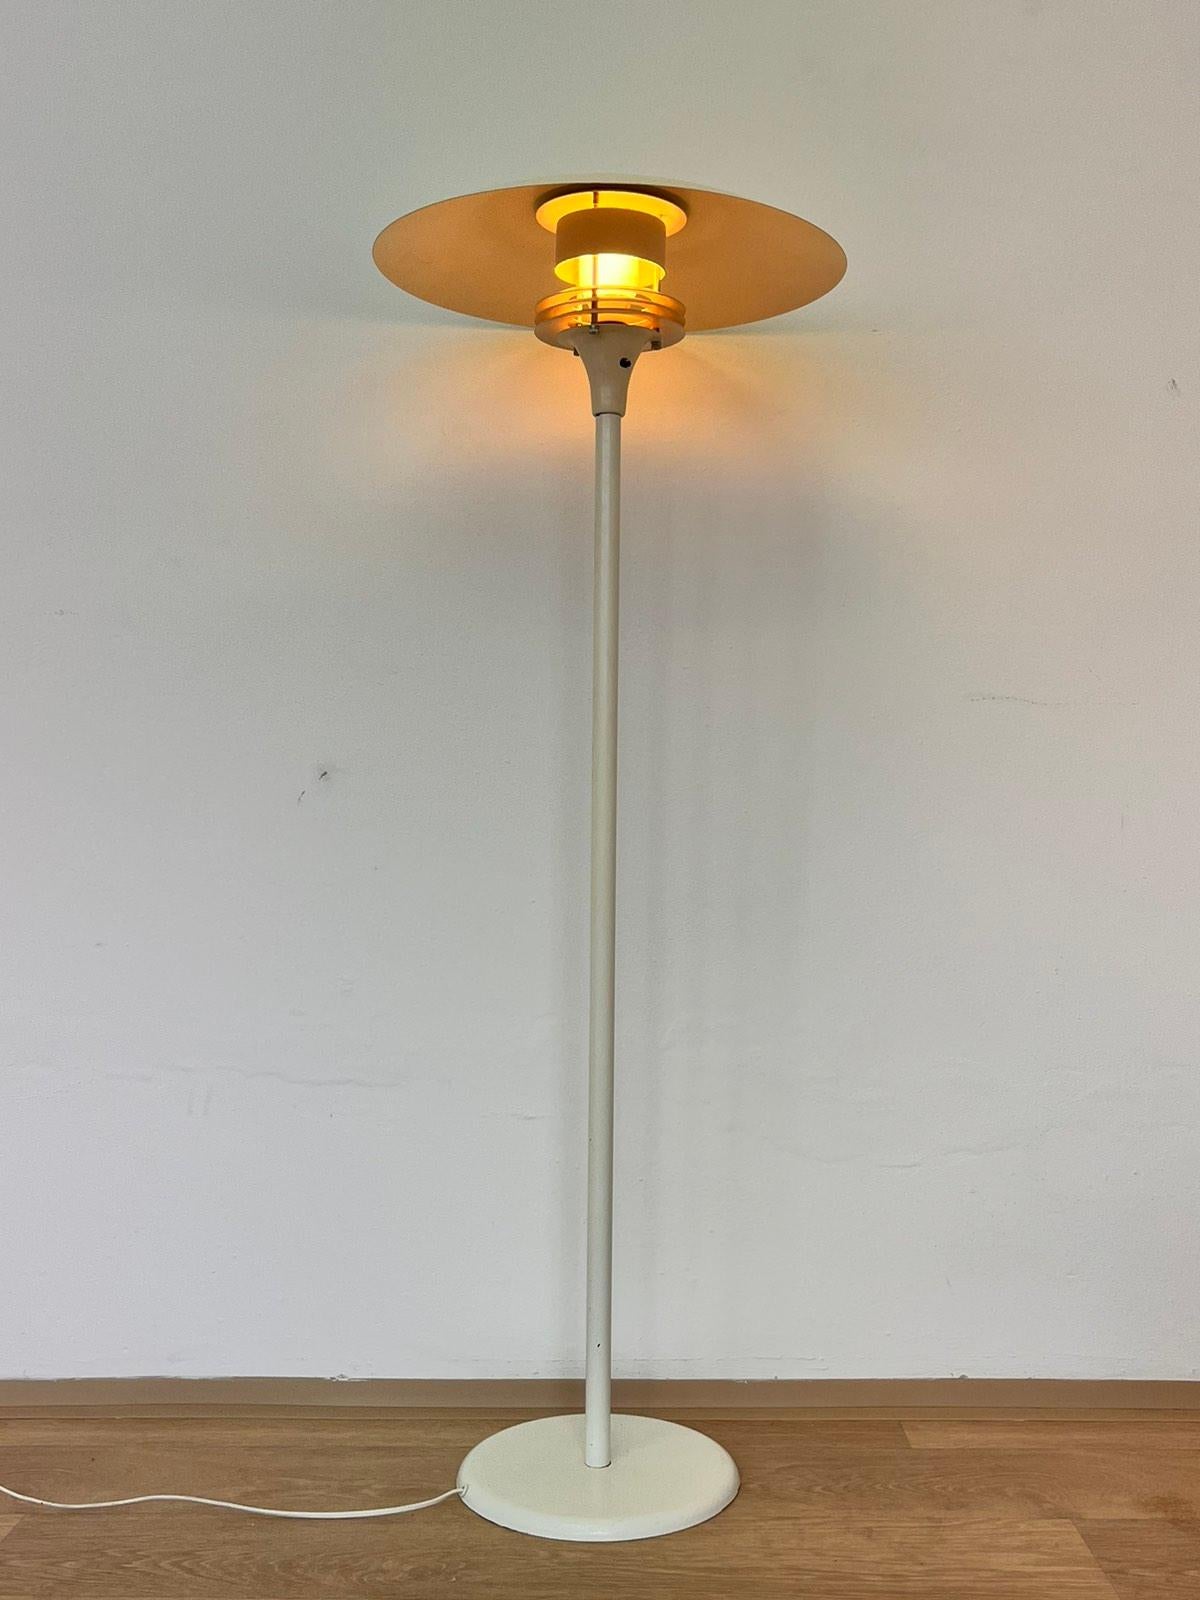 Lacquered Rare Midcentury Floor Lamp in style of Poul Henningsen, Denmark, 1960s For Sale